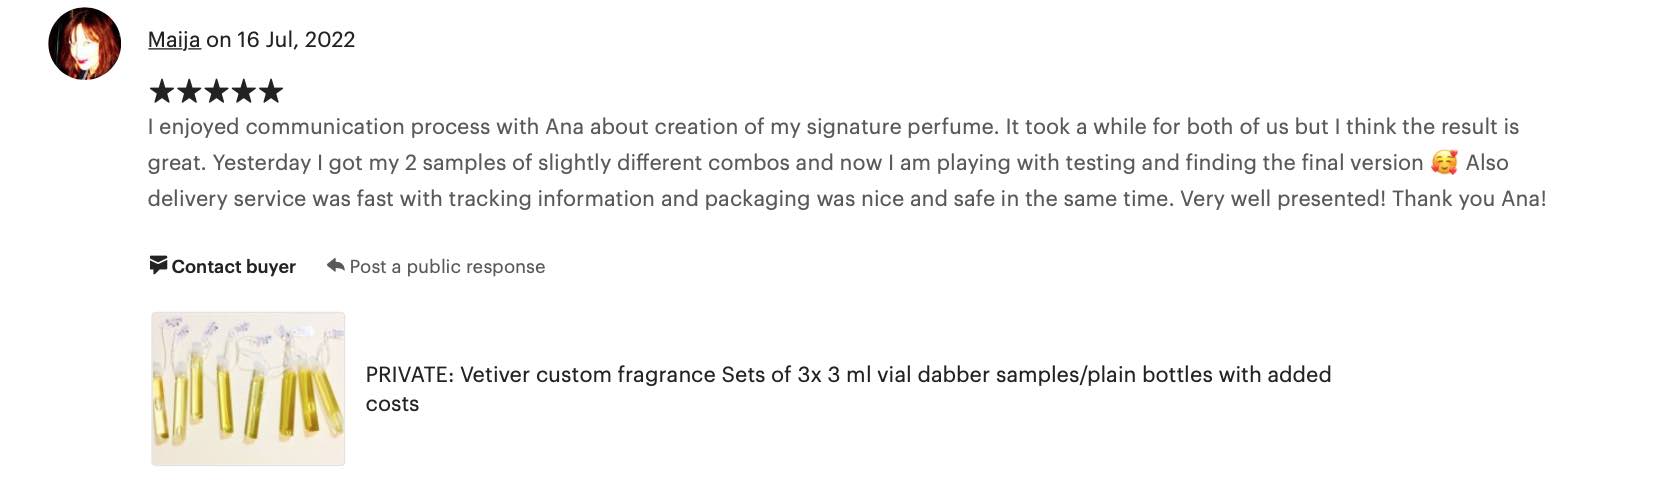 Maija feedback about a custom fragrance in samples